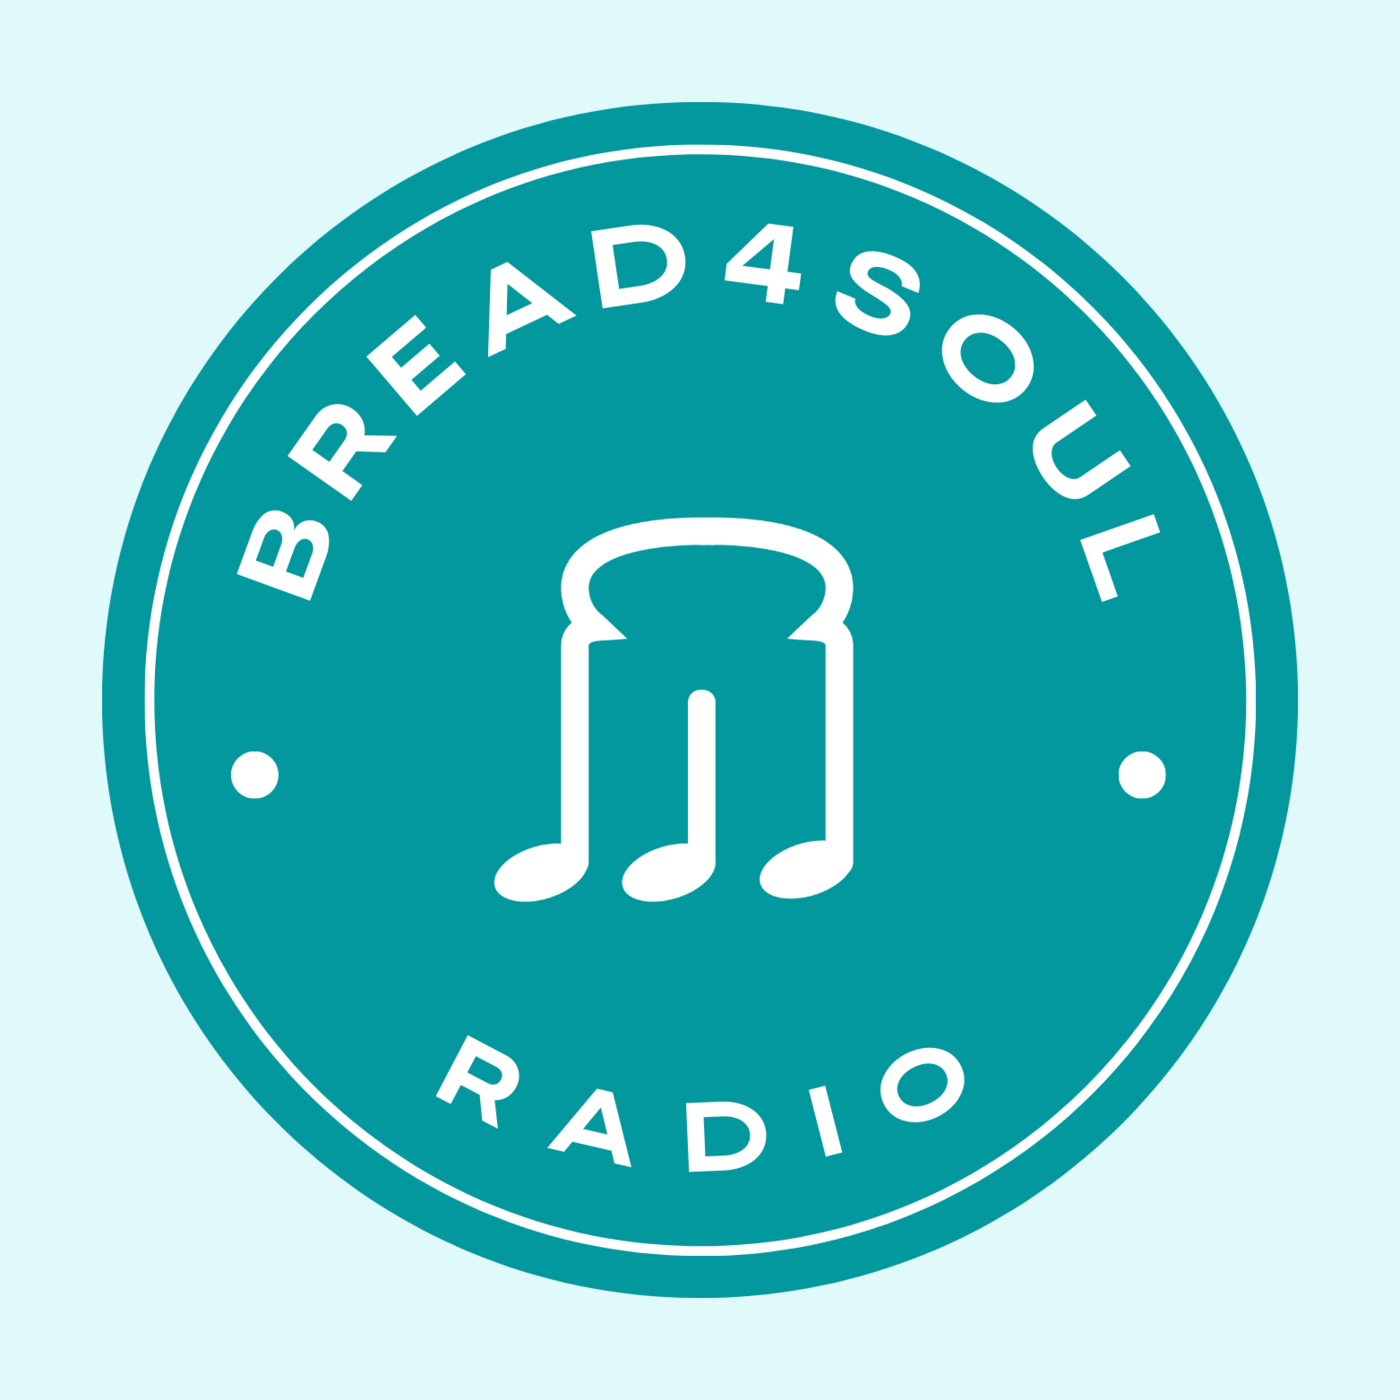 Bread4Soul Radio